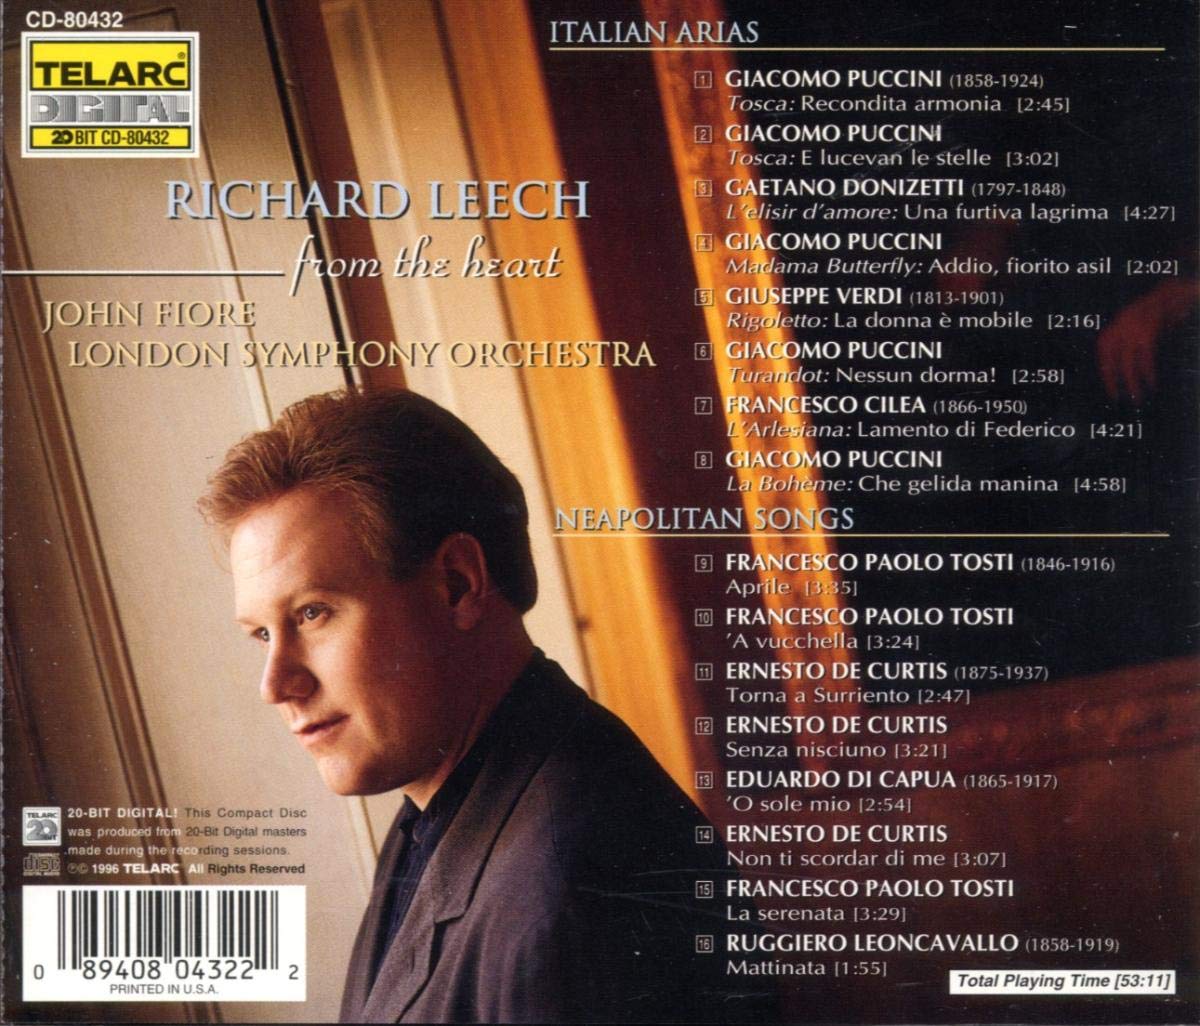 FROM THE HEART (ITALIAN ARIAS & NEAPOLITAN SONGS) - RICHARD LEECH, John Fiore